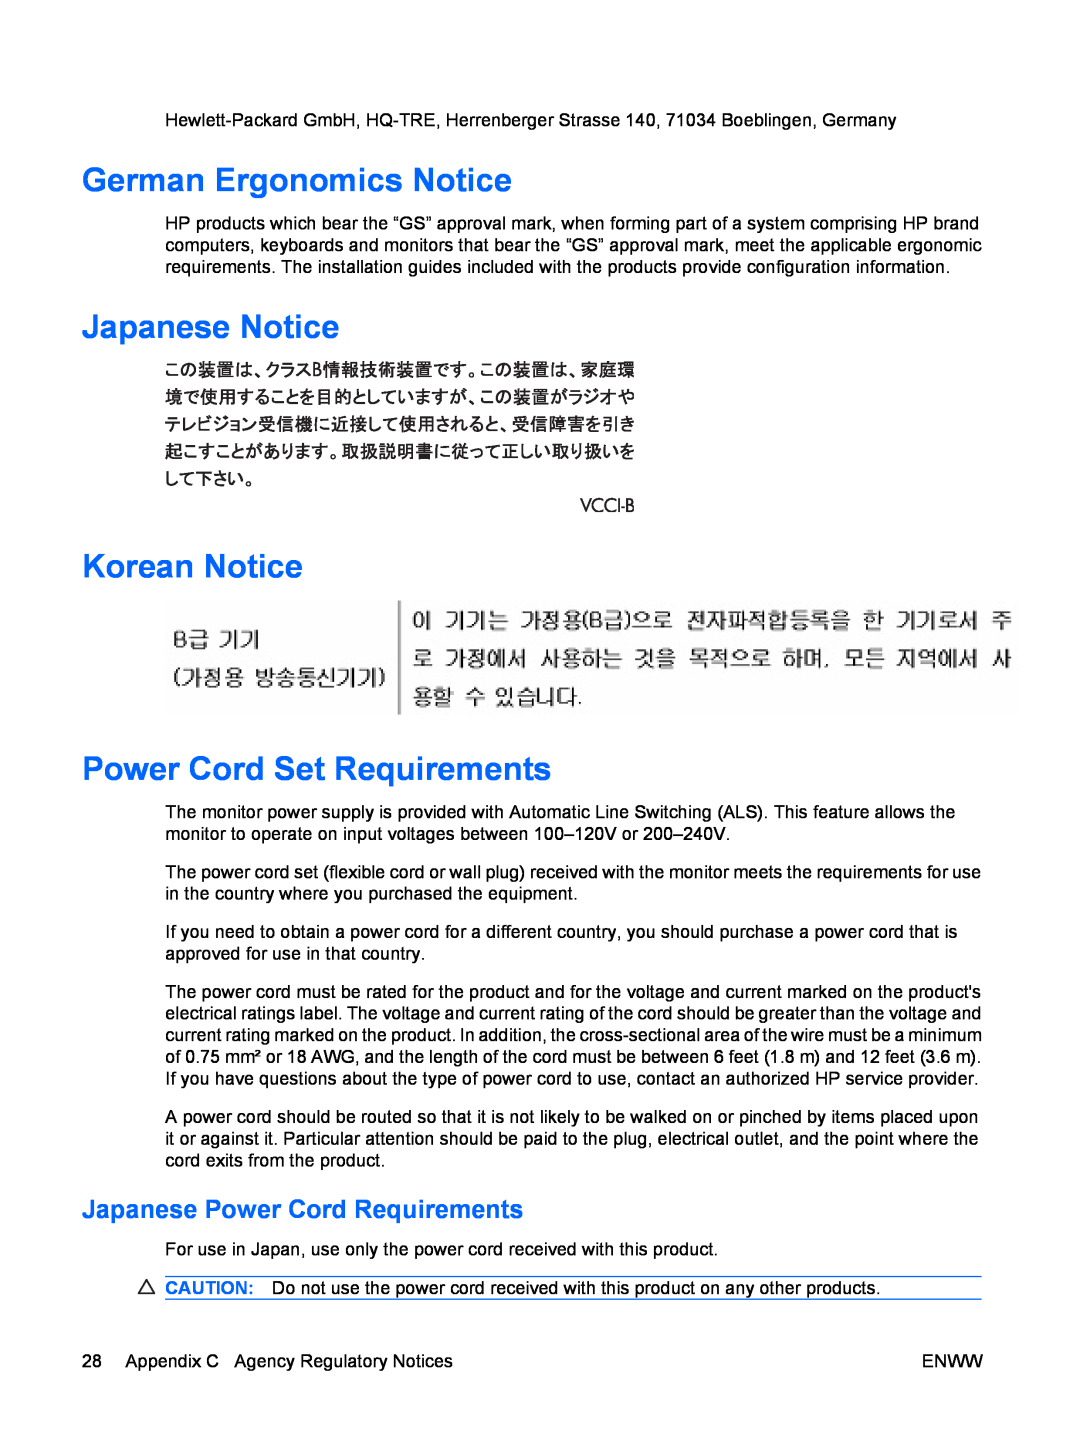 HP CQ1859s, CQ1859E manual German Ergonomics Notice, Japanese Notice Korean Notice Power Cord Set Requirements 